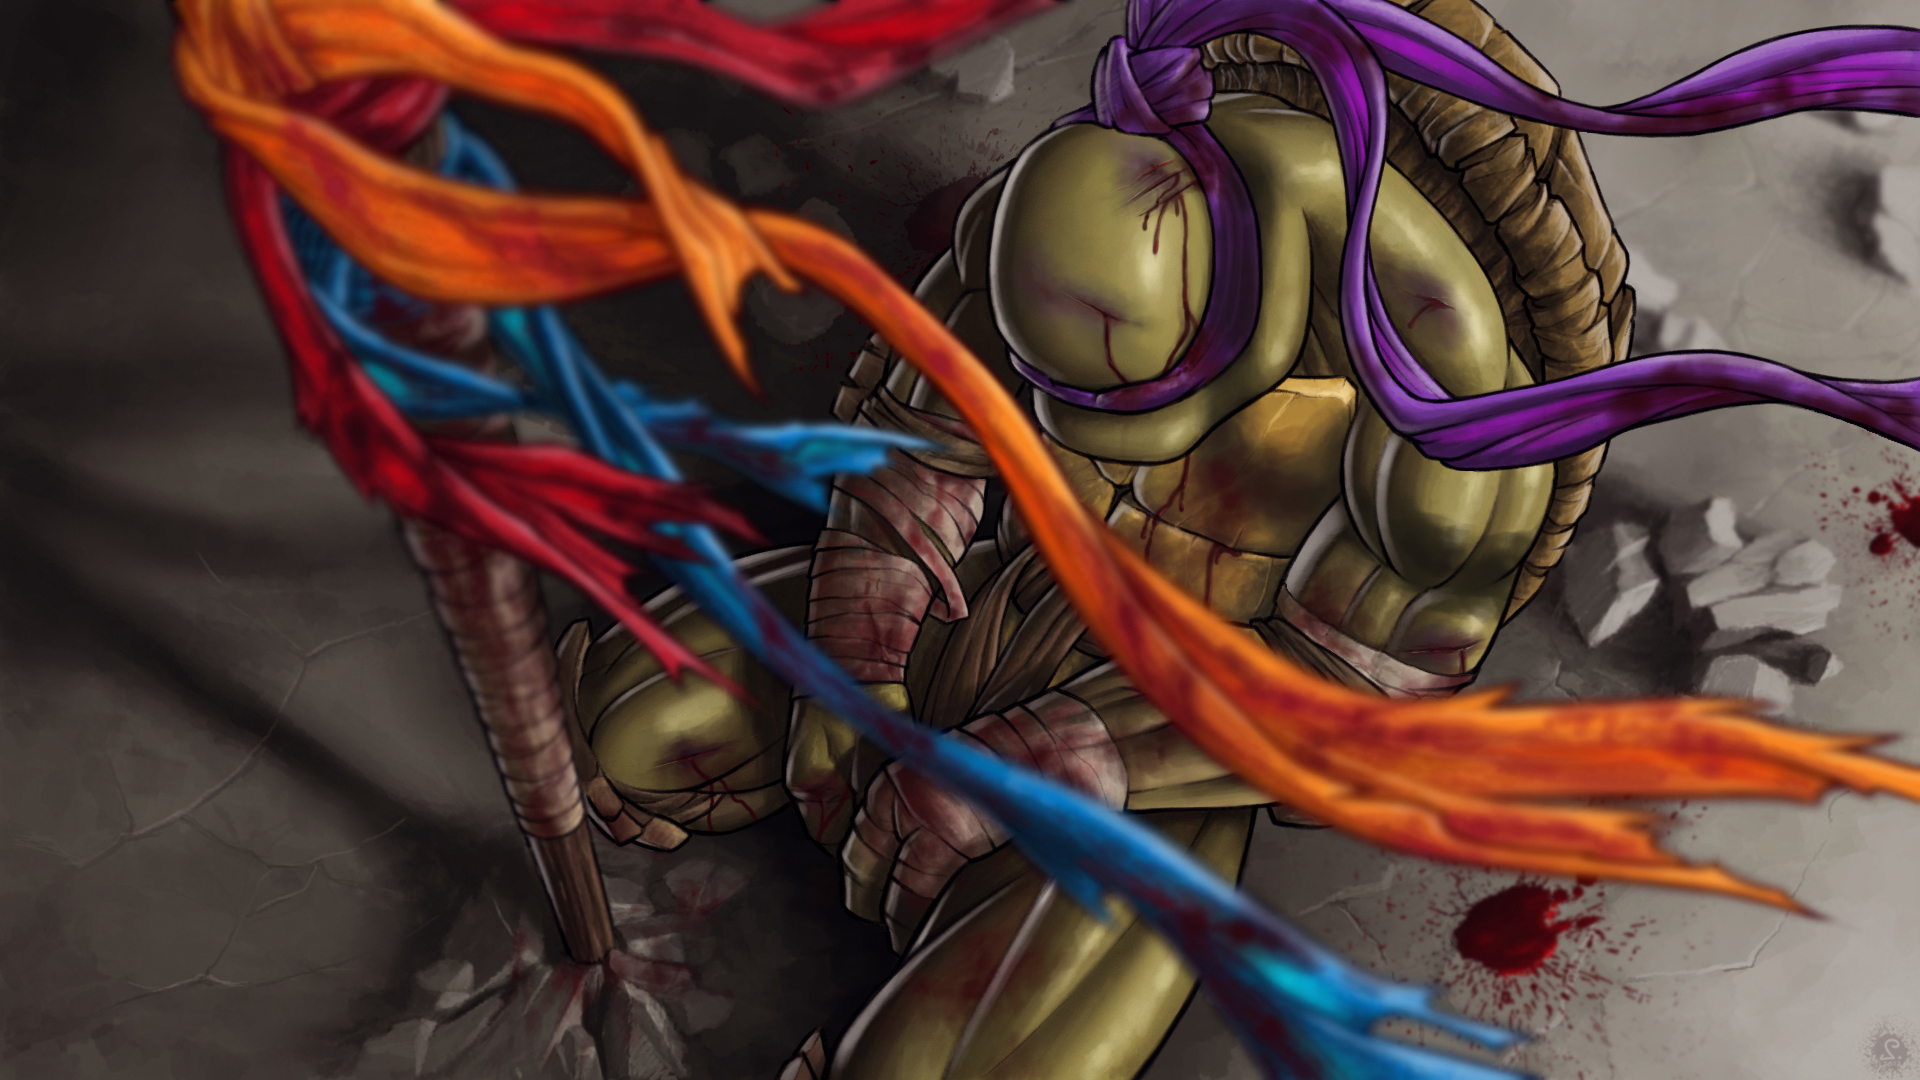 311485 Bild herunterladen comics, teenage mutant ninja turtles - Hintergrundbilder und Bildschirmschoner kostenlos